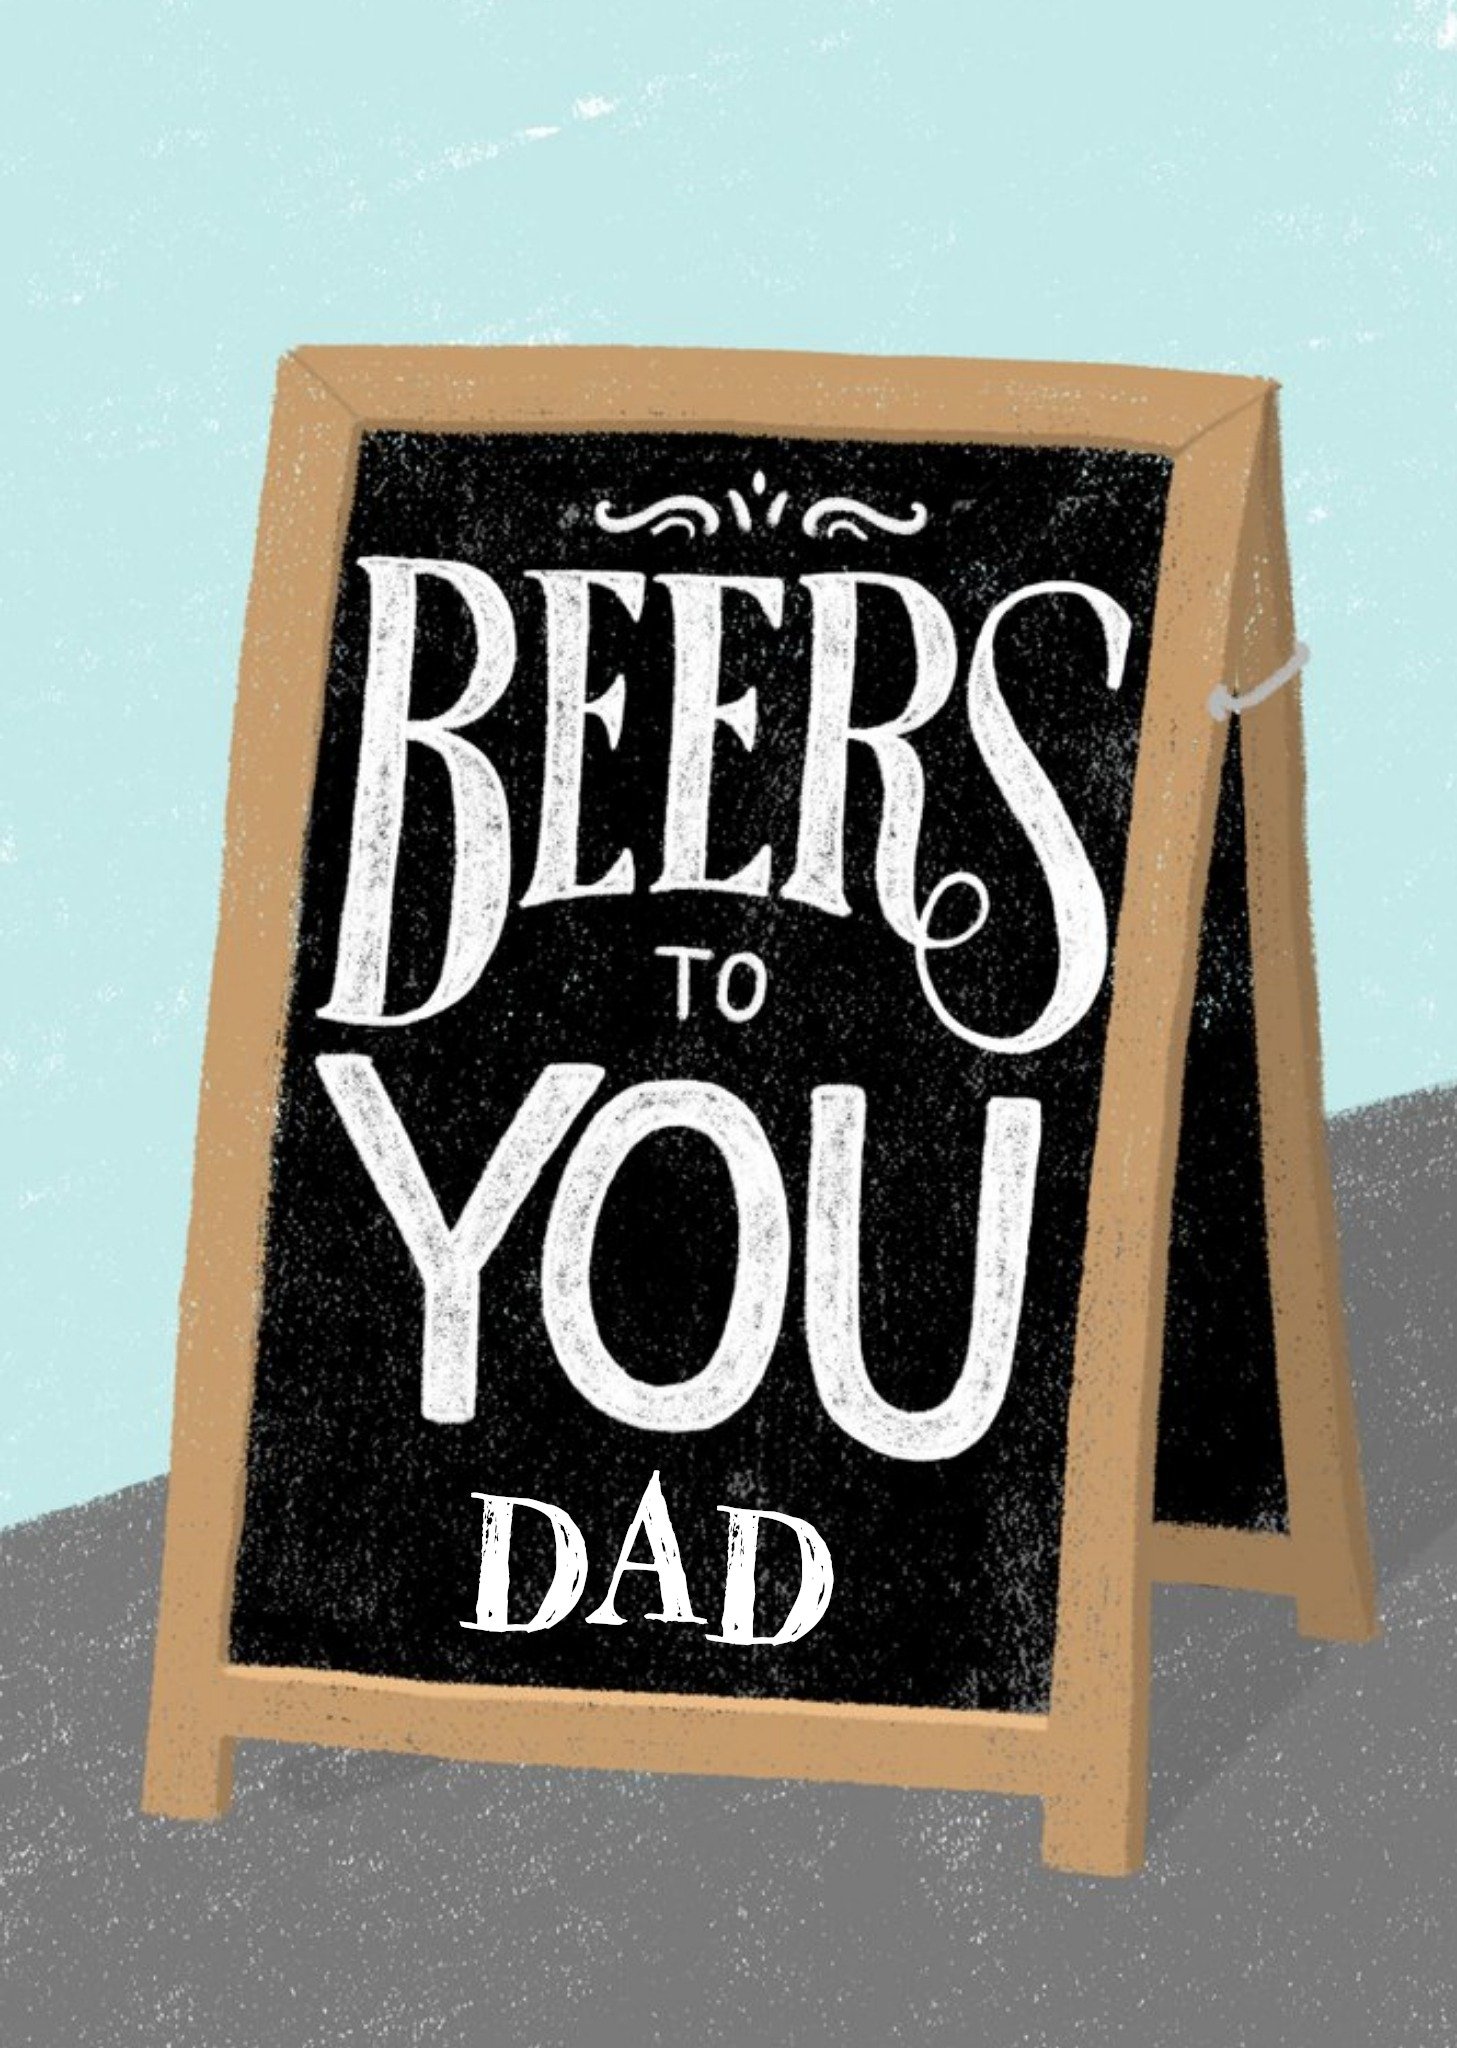 Moonpig Beers To You Dad Sandwich Board Card Ecard